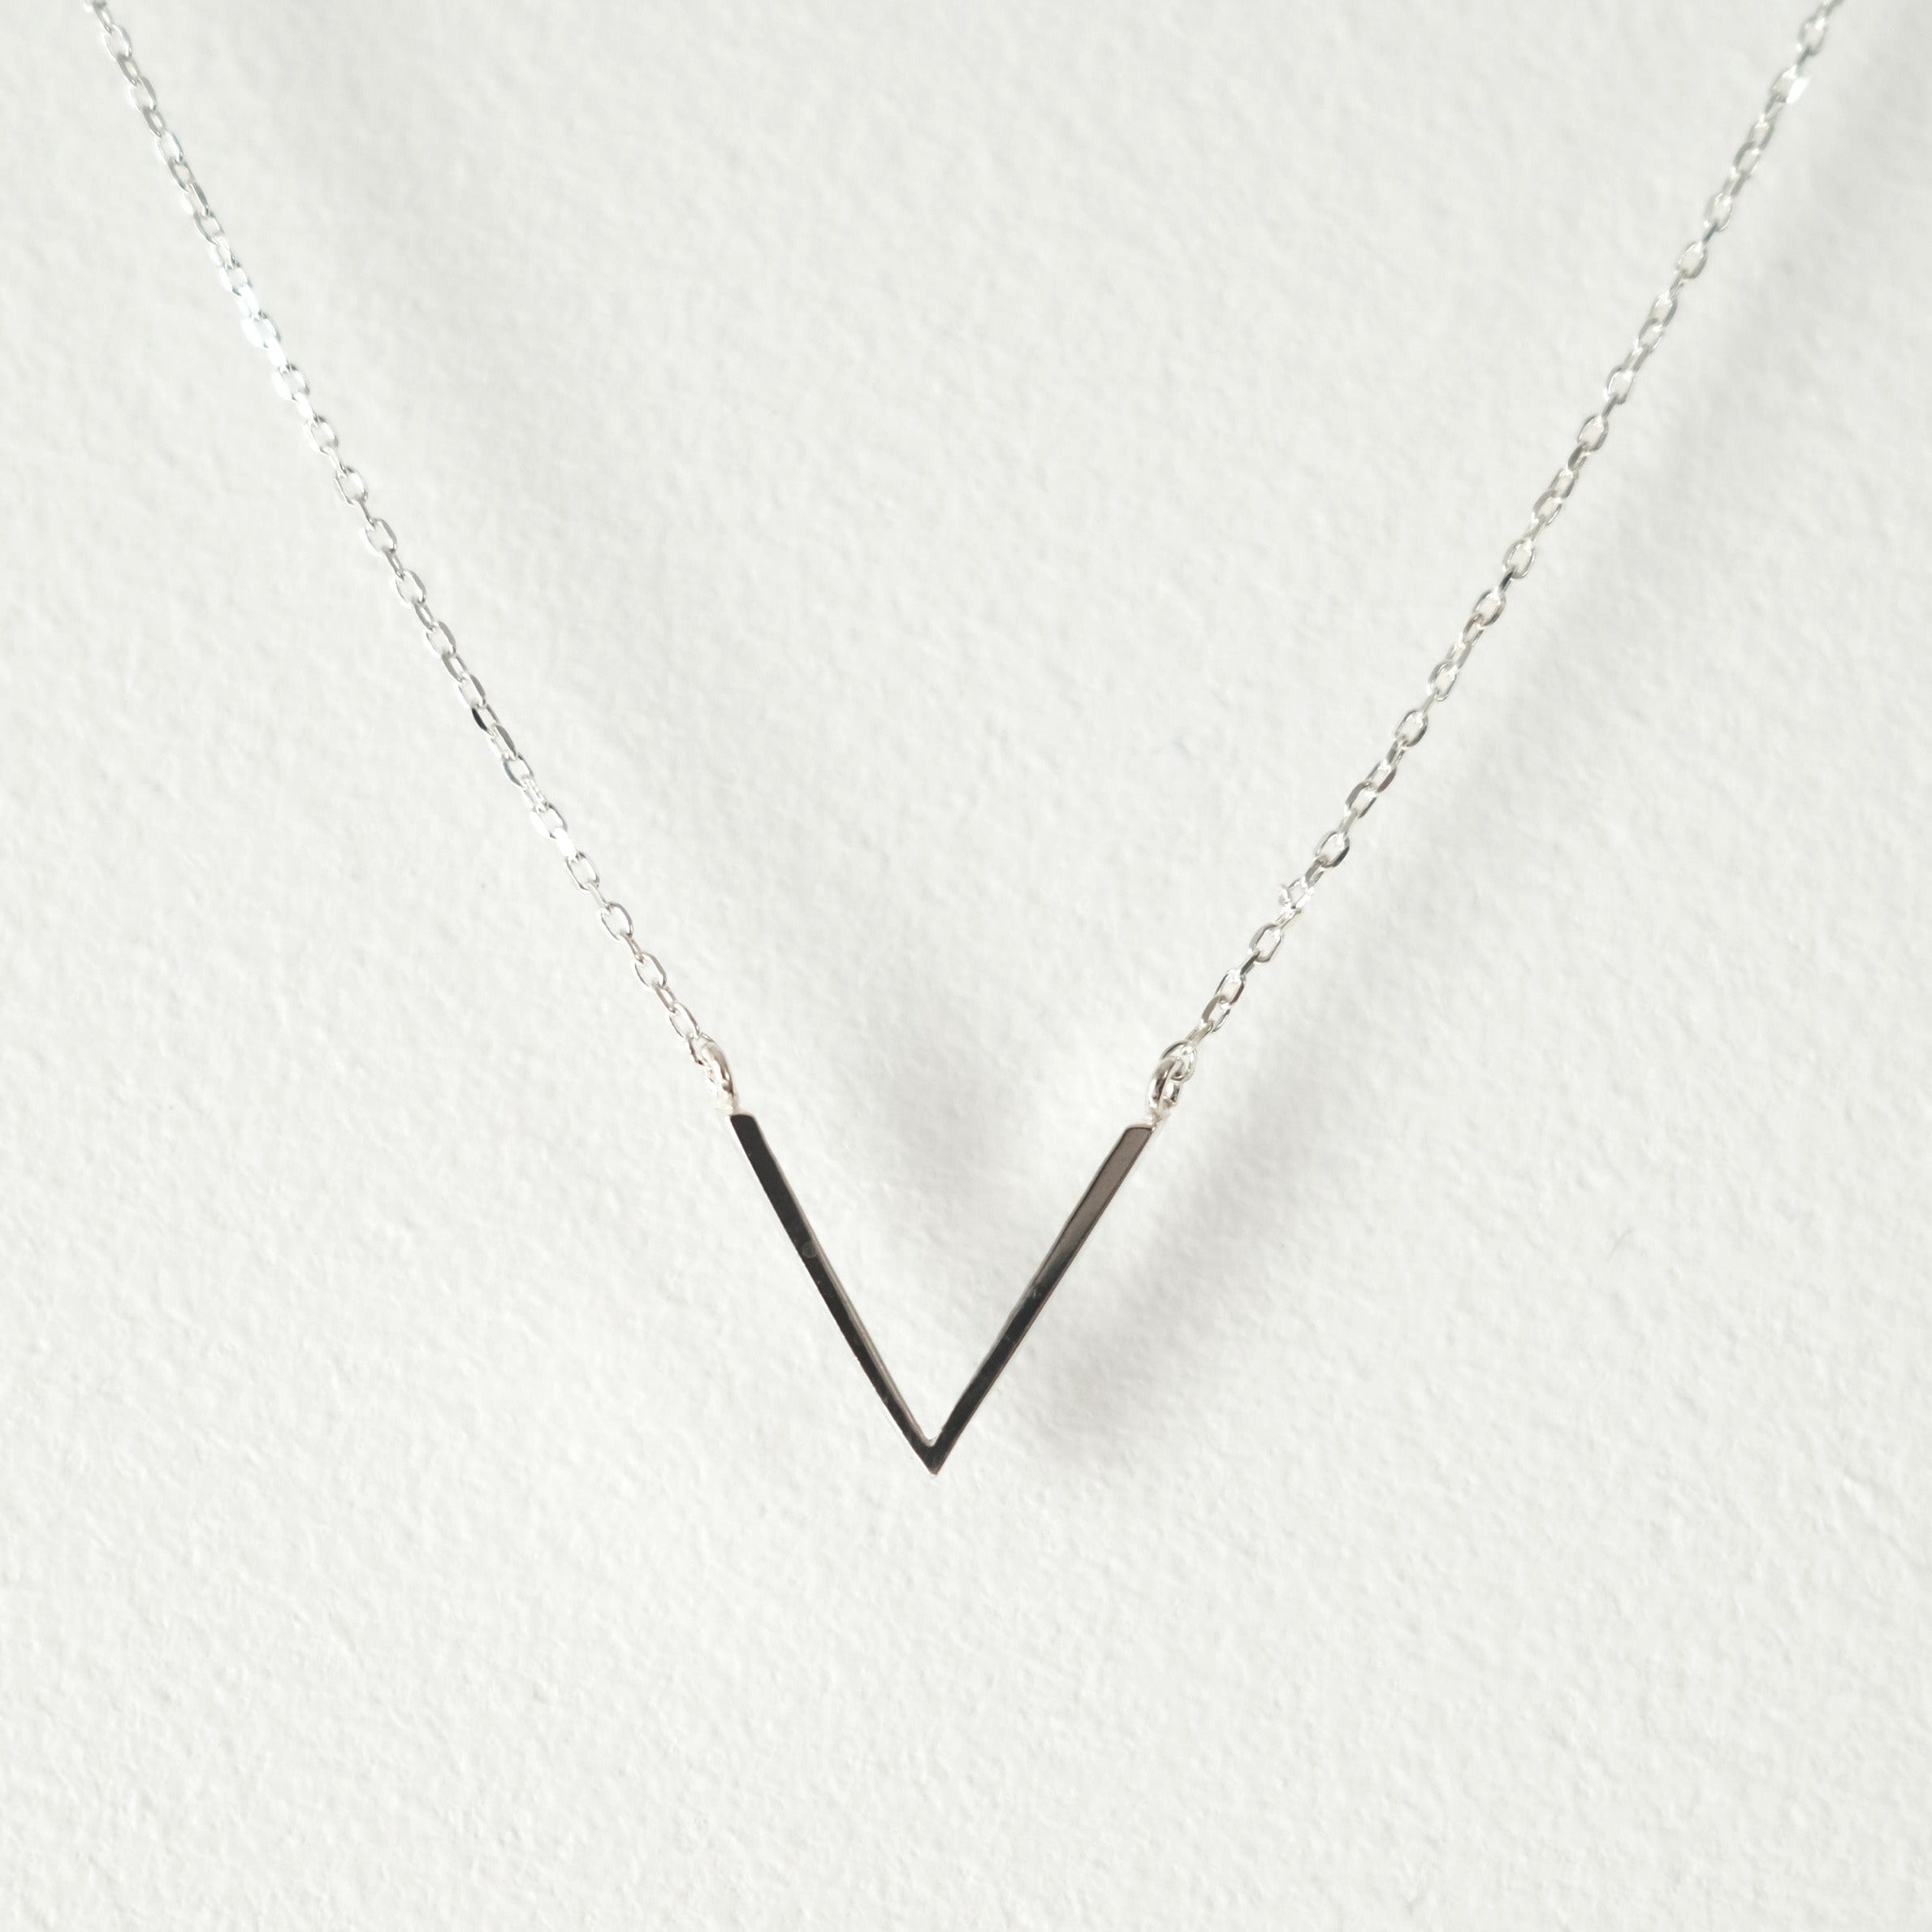 The V Necklace